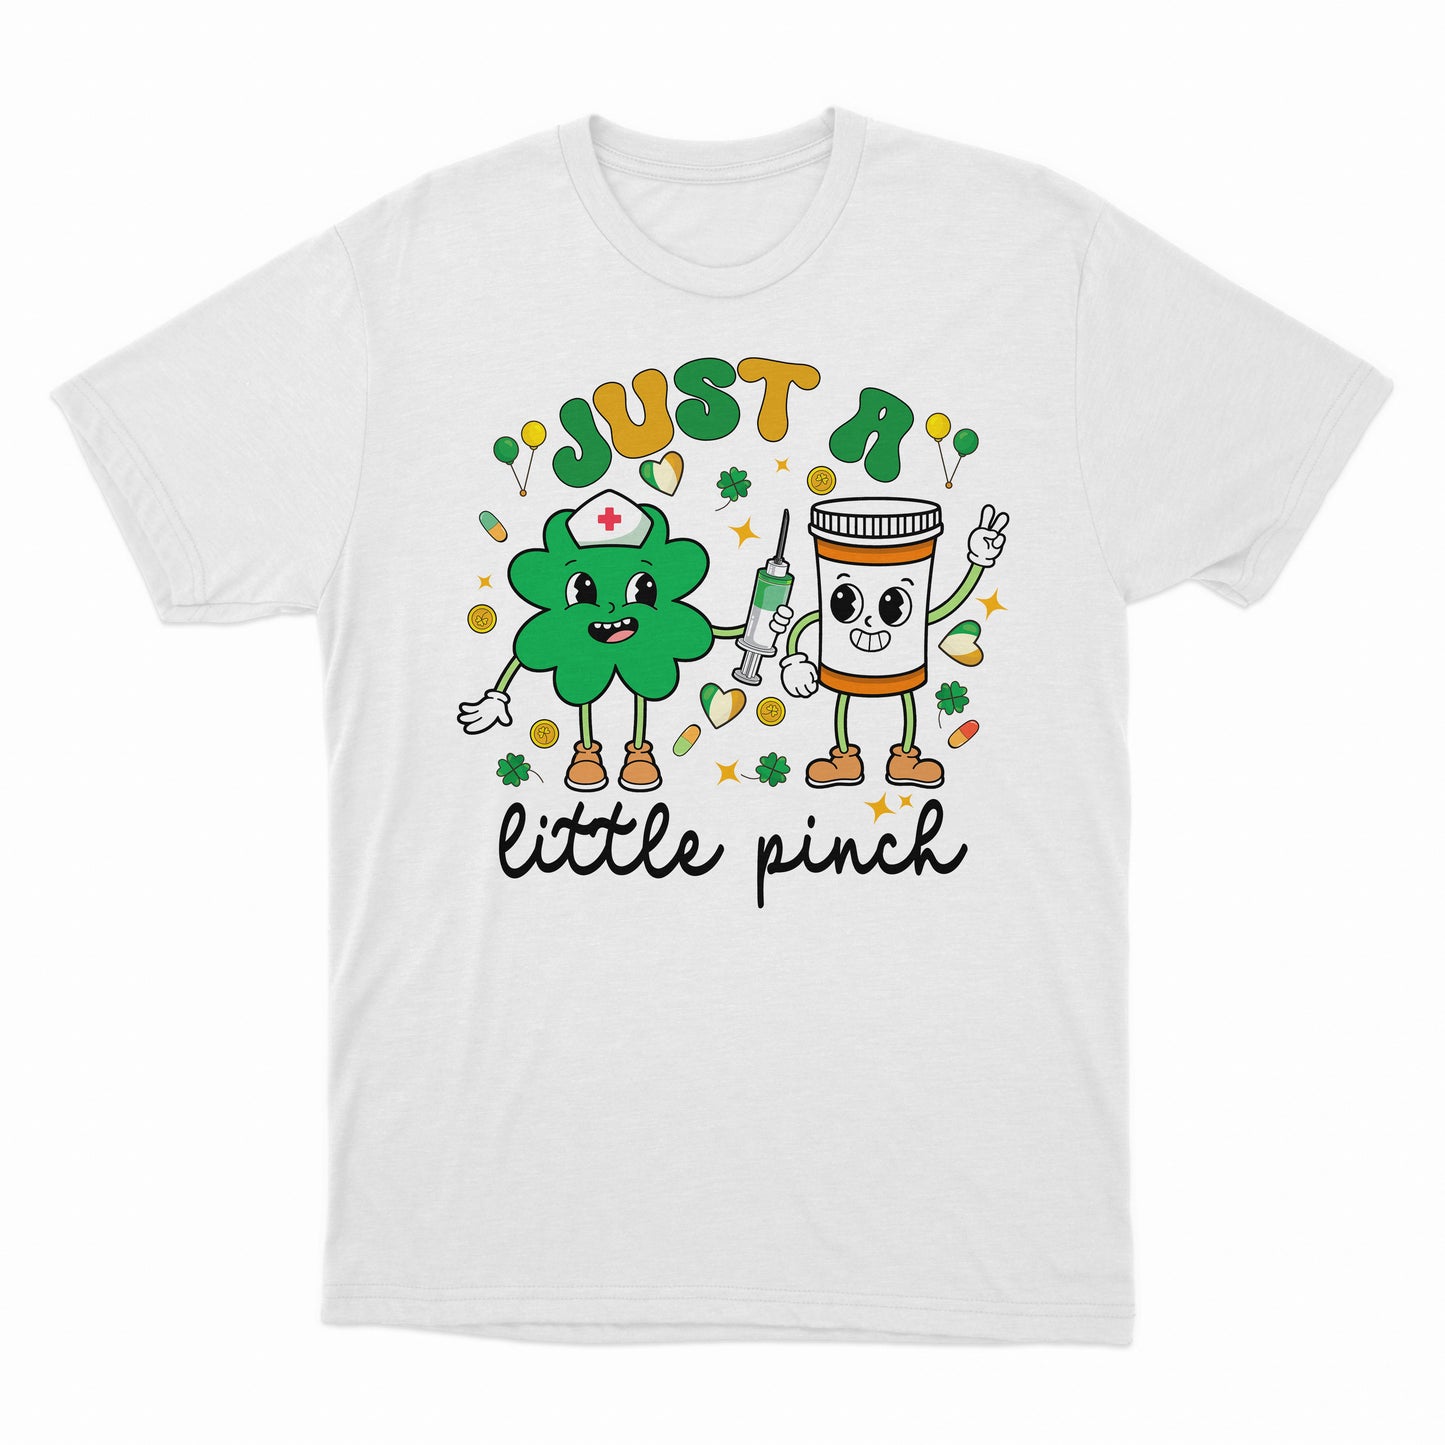 Funny Nursing St Patrick's Day Shirt, Cute 4 Pharmacist Nurse Shirt, Funny St Patrick's Quote For Nurse Shirt, St Patrick's Day For Nurse, Nursing Shirt, Gift For Pharmacist, Retro Funny Nurse Quote